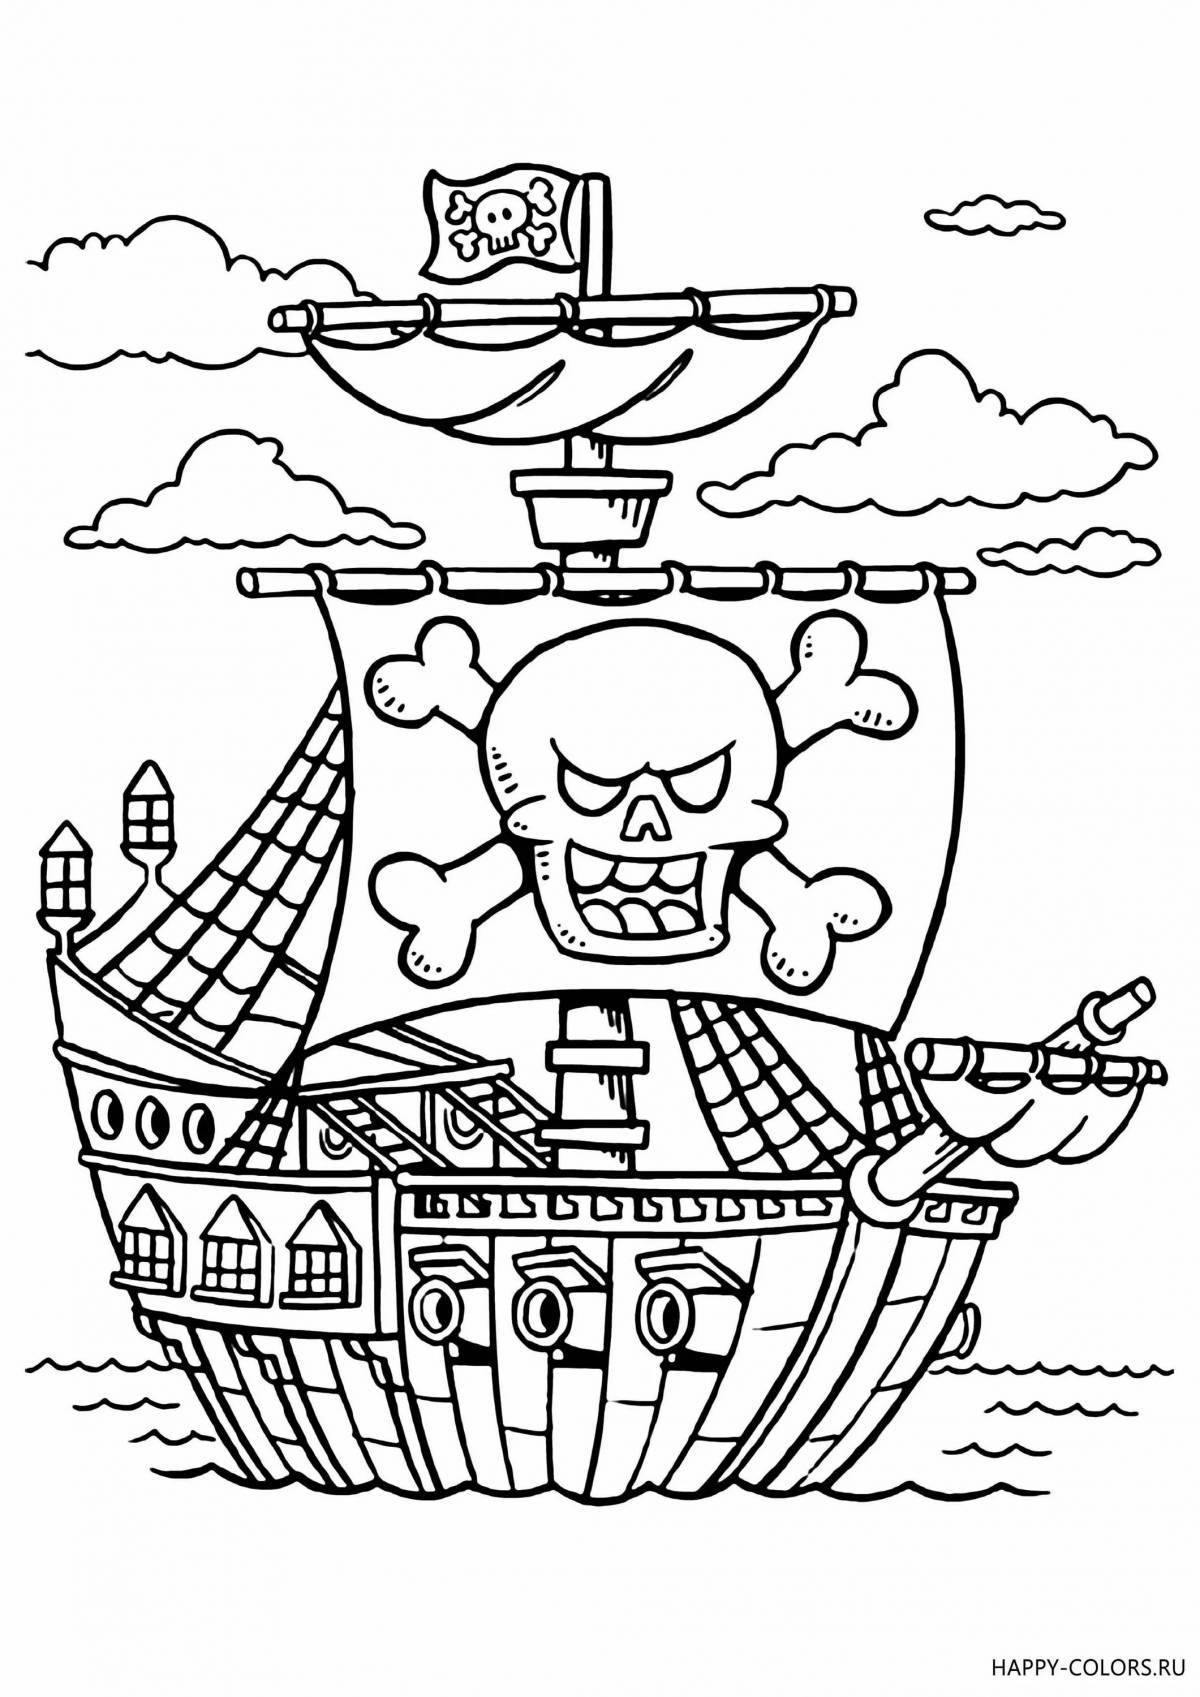 A fun pirate ship coloring book for kids